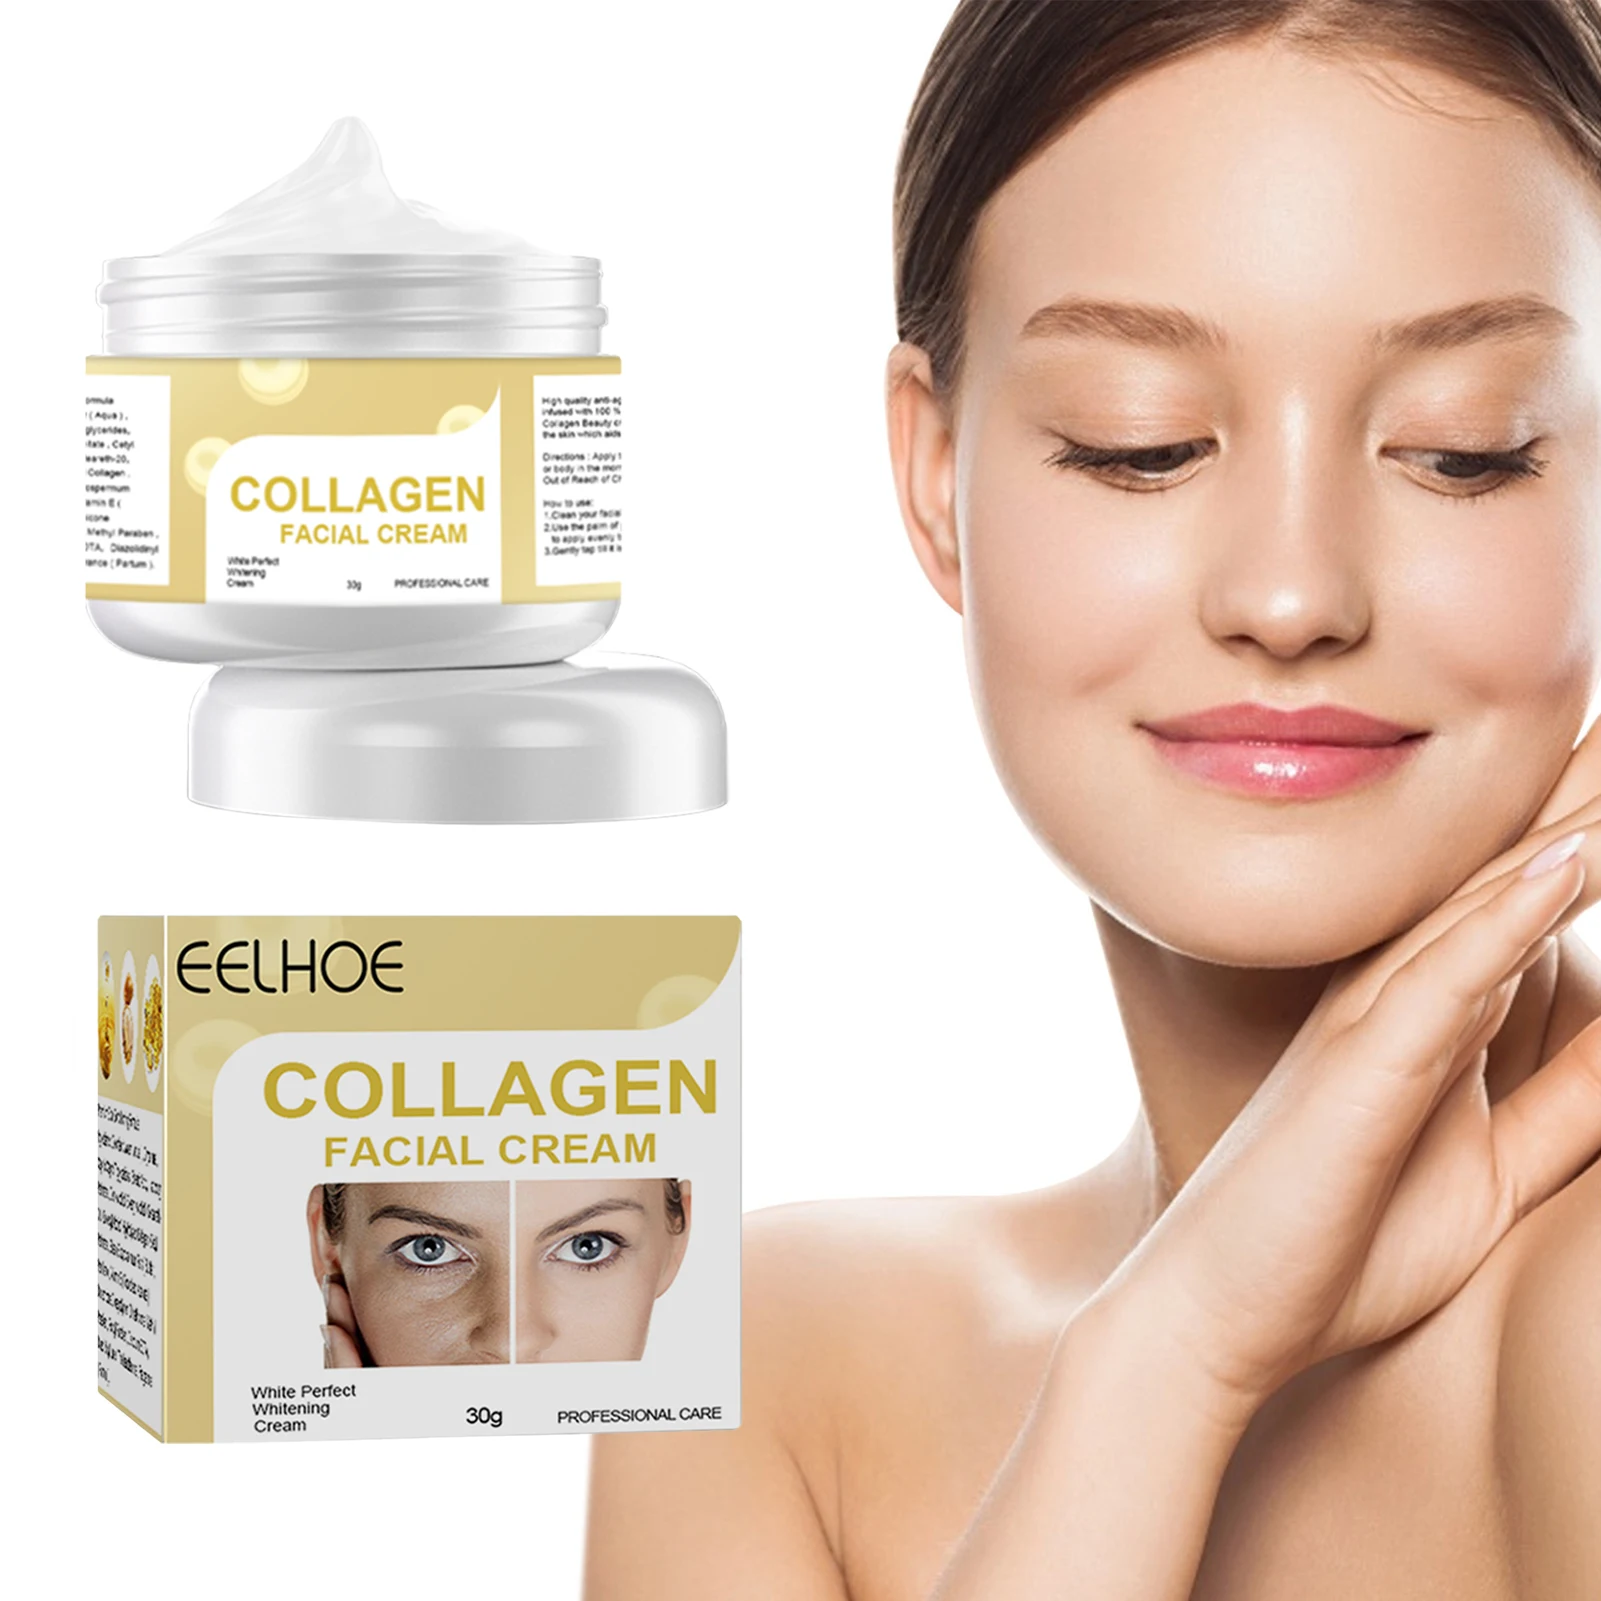 

New Collagen Face Cream Repairing Moisturizing Nourishing Cream Reduce Wrinkles Brightening Skin Facial Cream Face Skin Care 30g